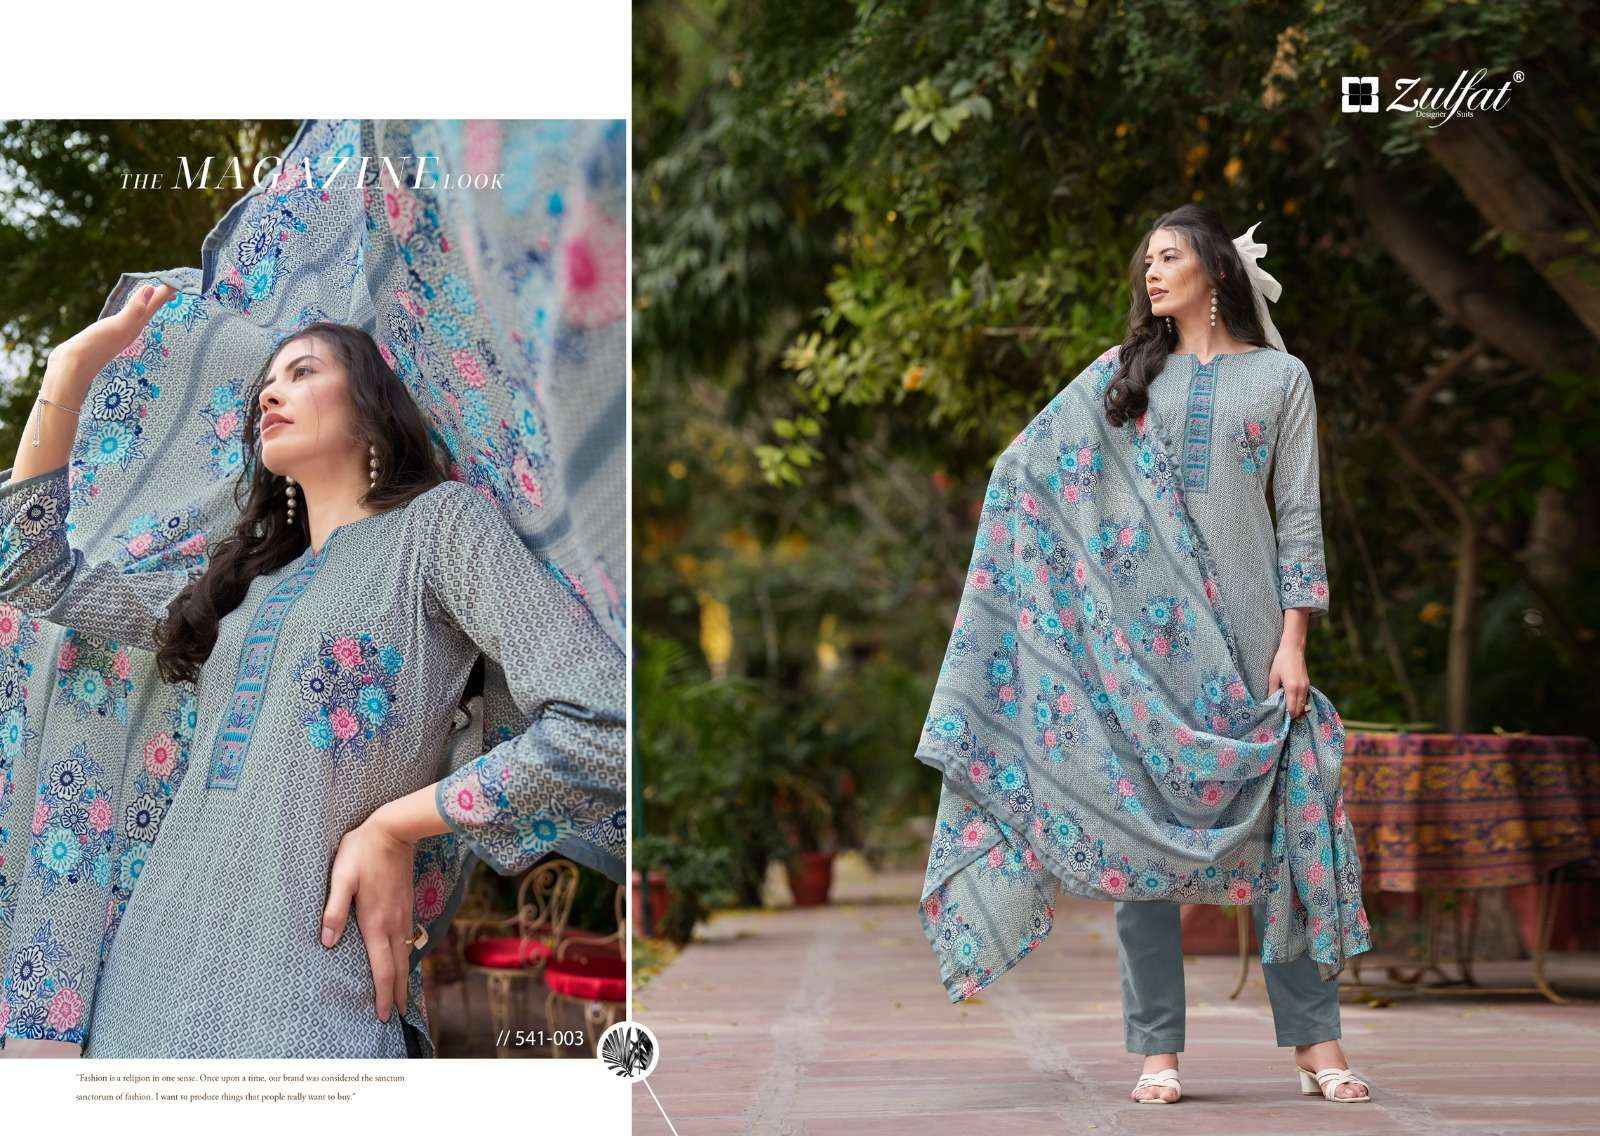 Zulfat Maryam Vol 3 Cotton Dress Material 8 pcs Catalogue